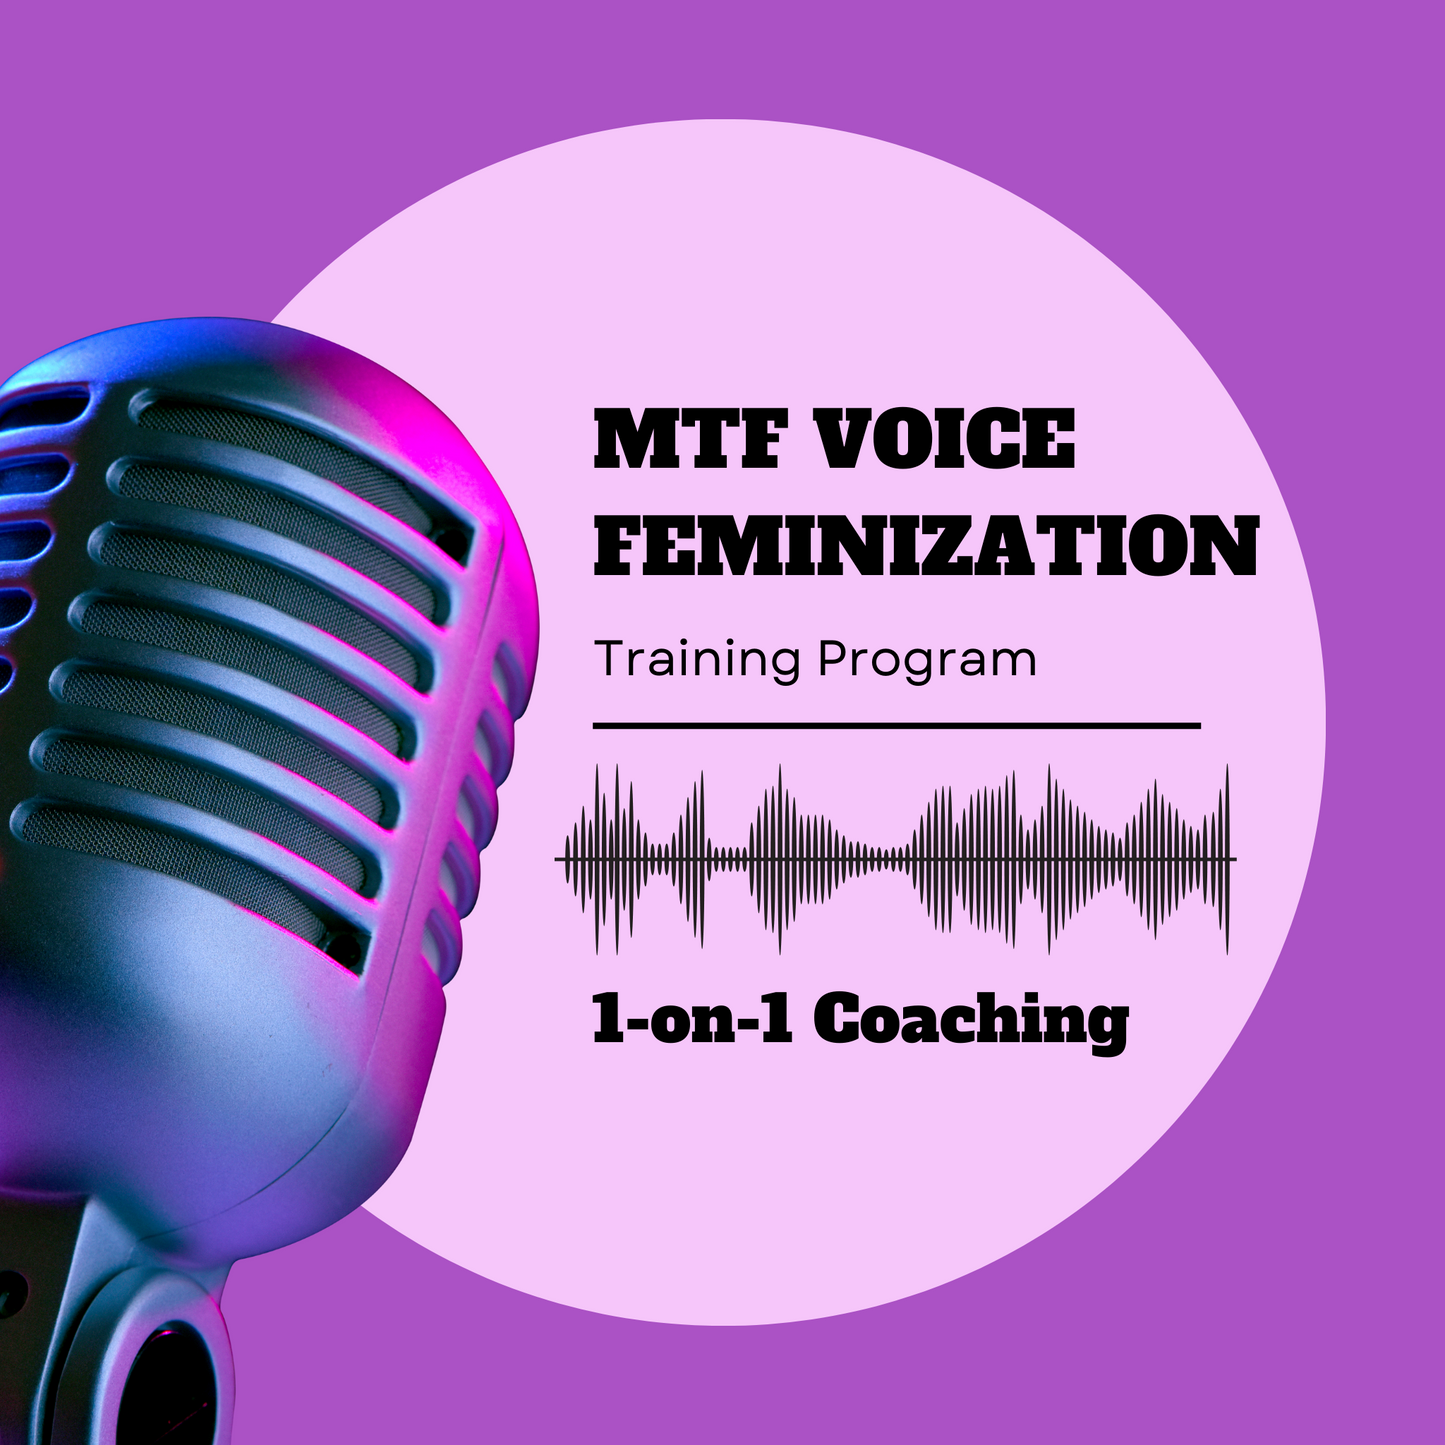 MTF Voice Feminization Training and Coaching Program